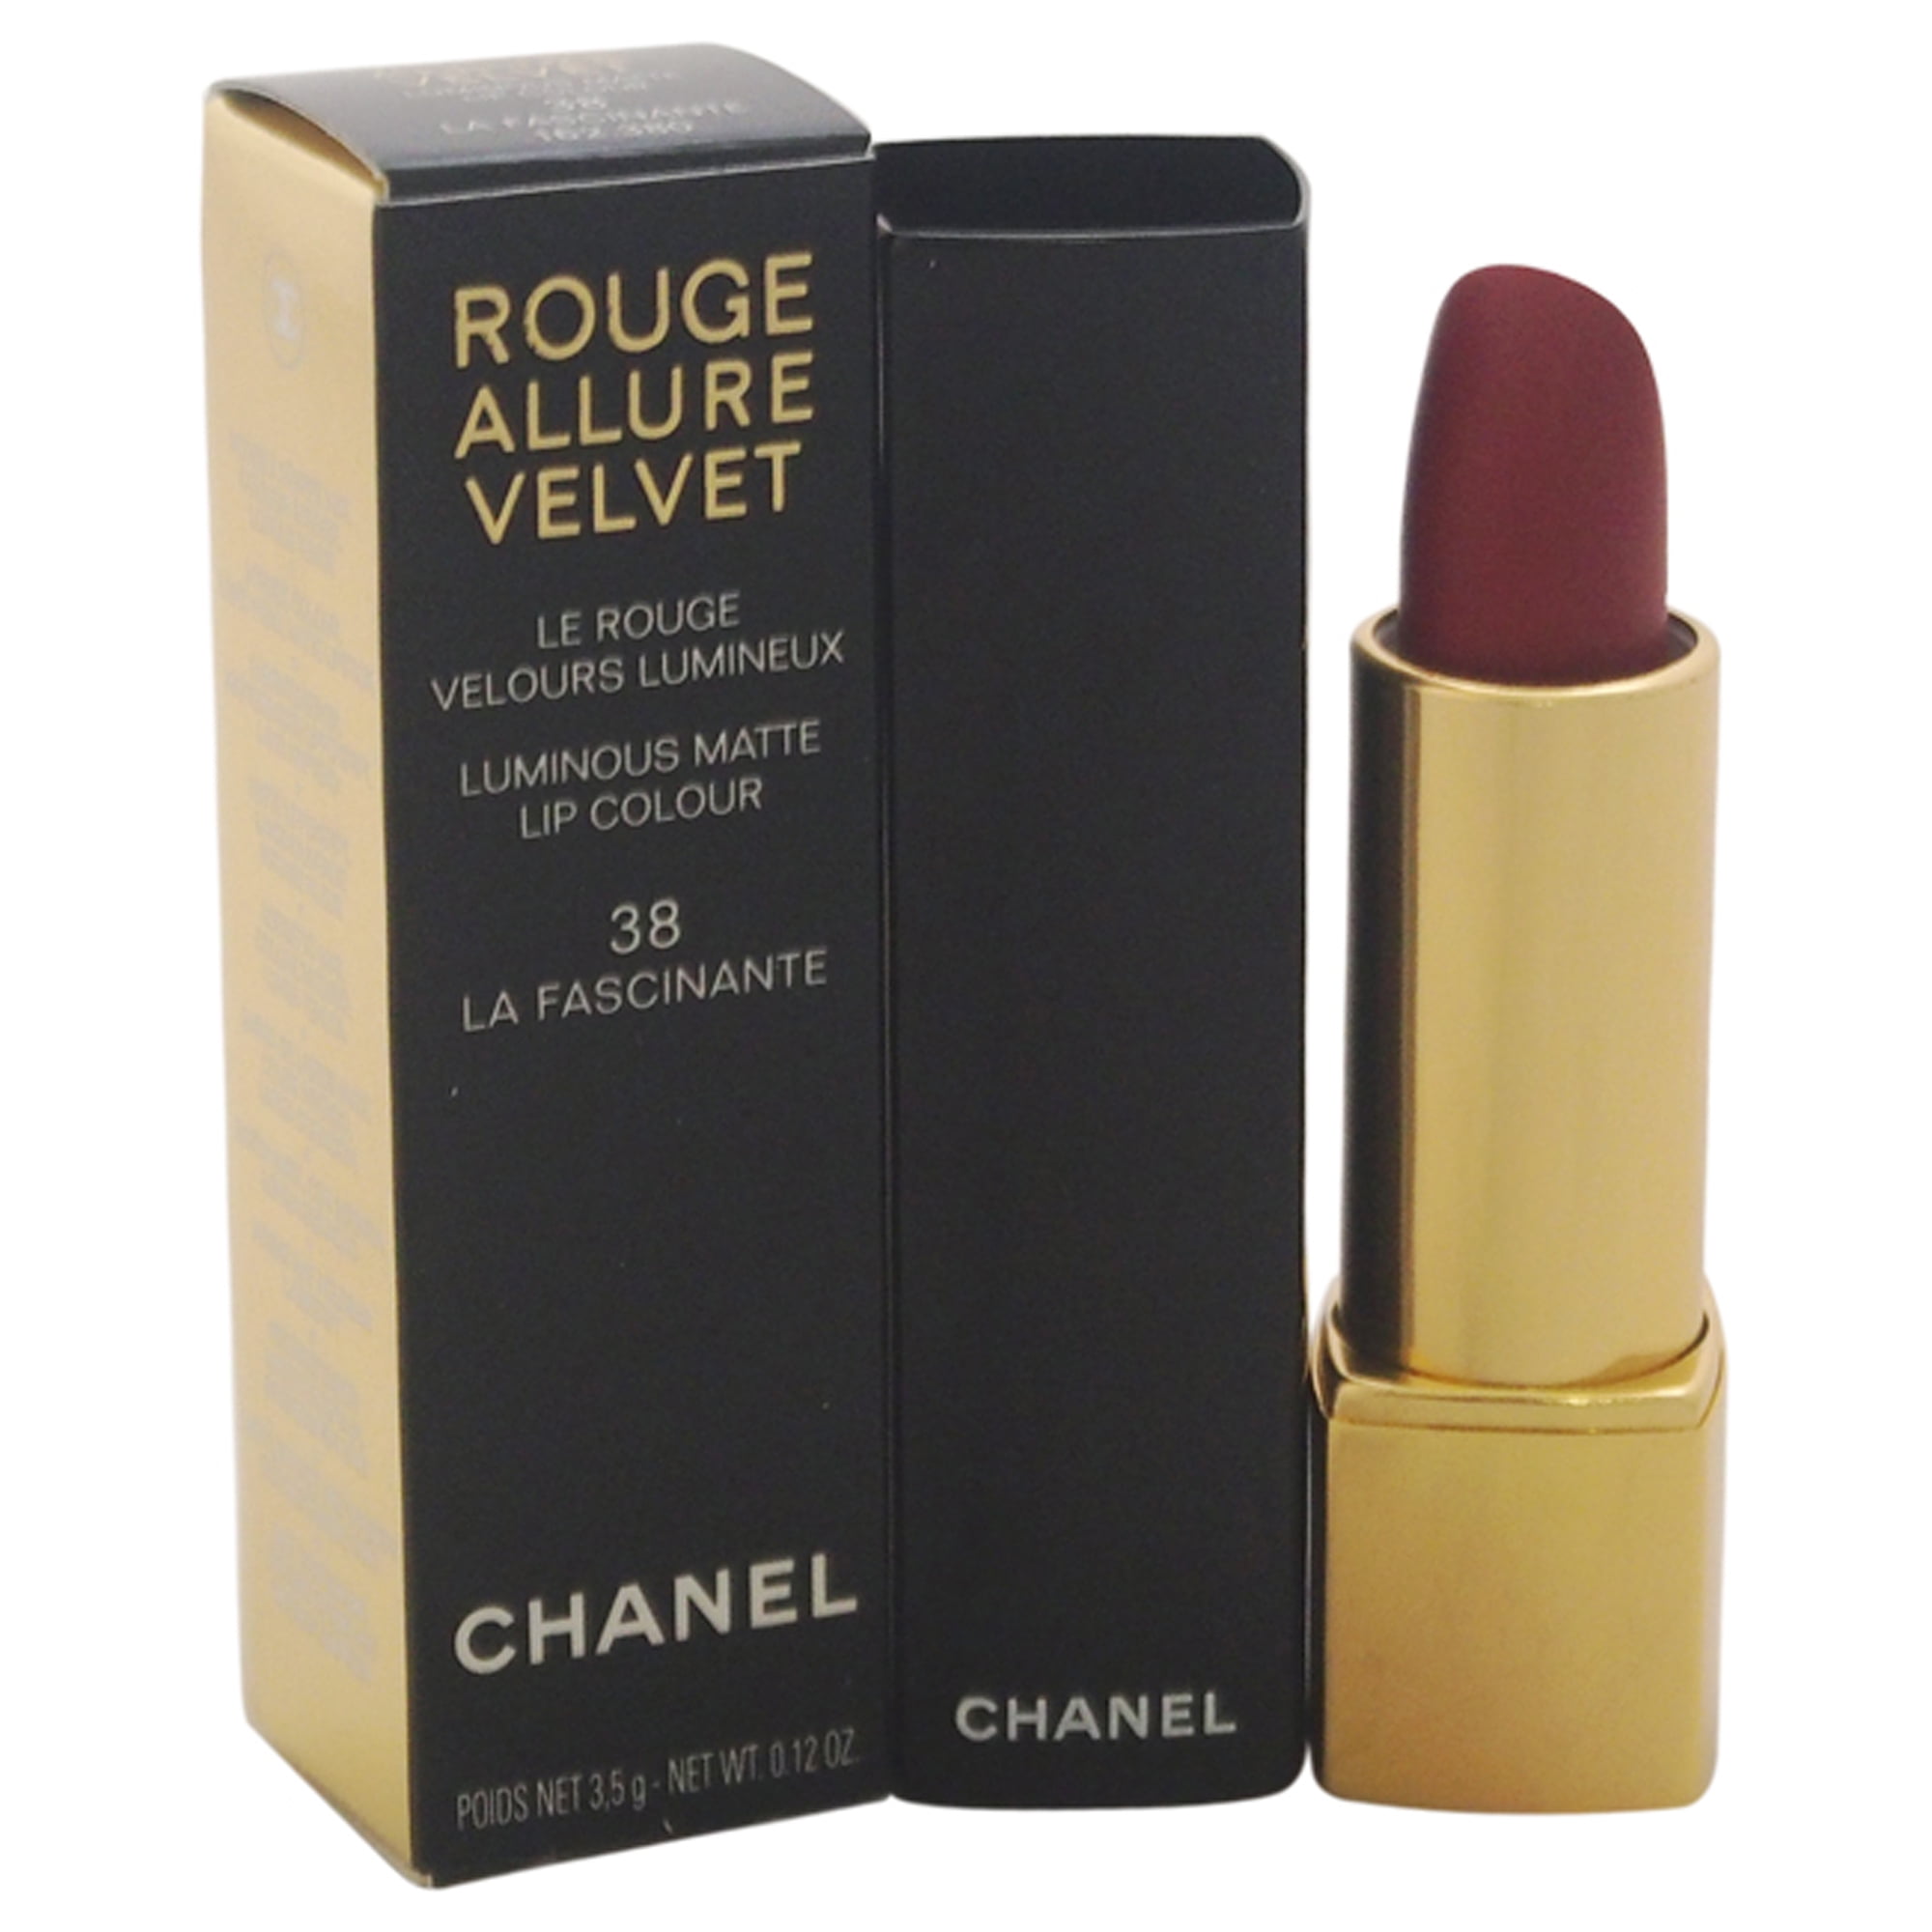 chanel lipstick #237